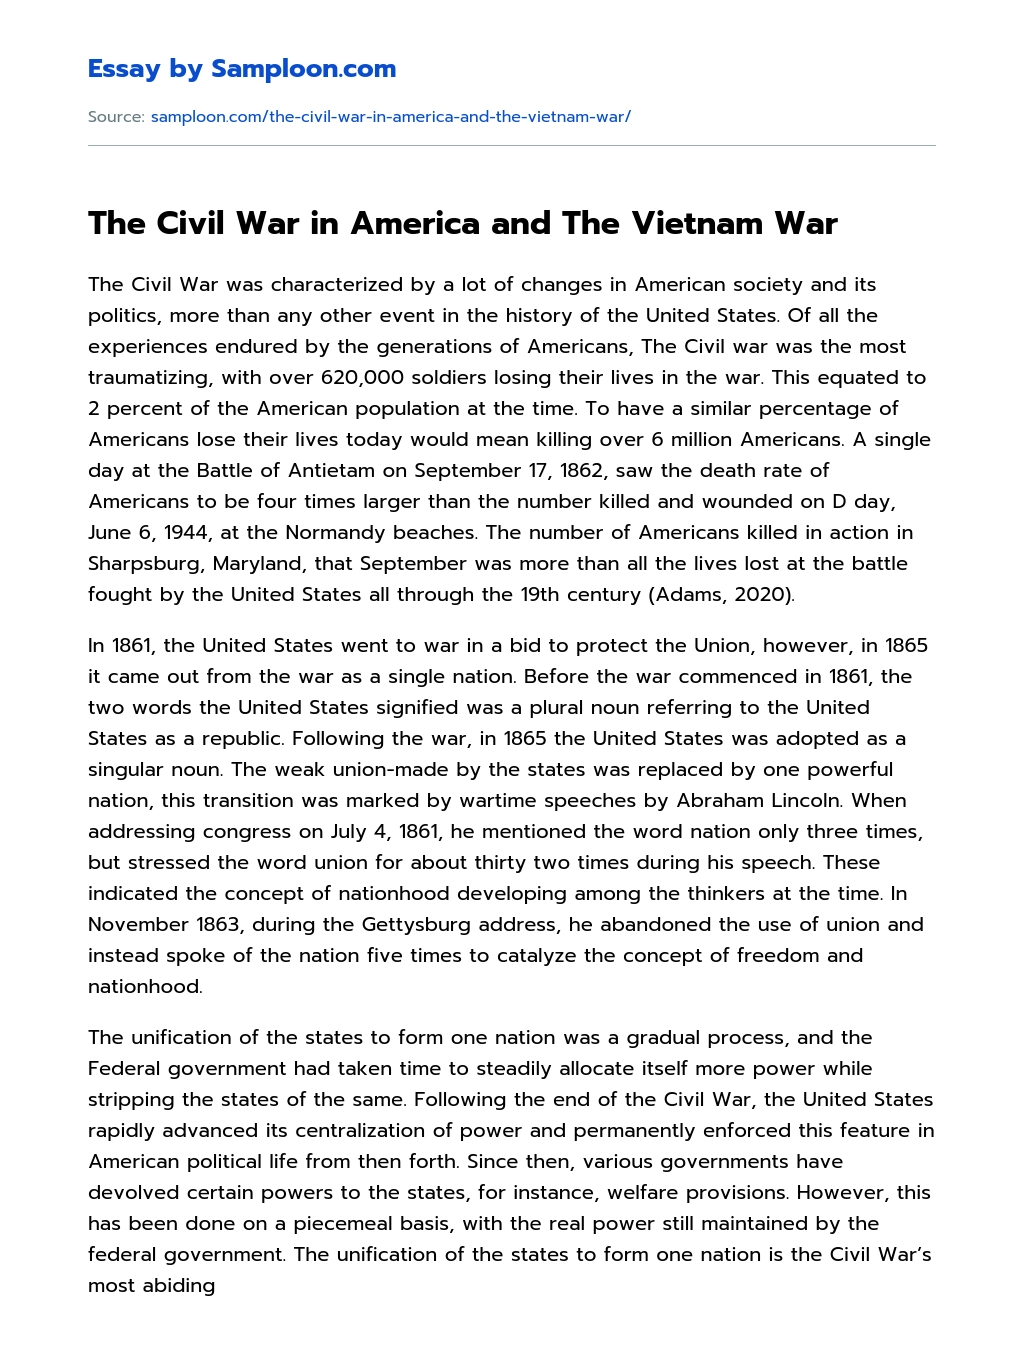 The Civil War in America and The Vietnam War essay